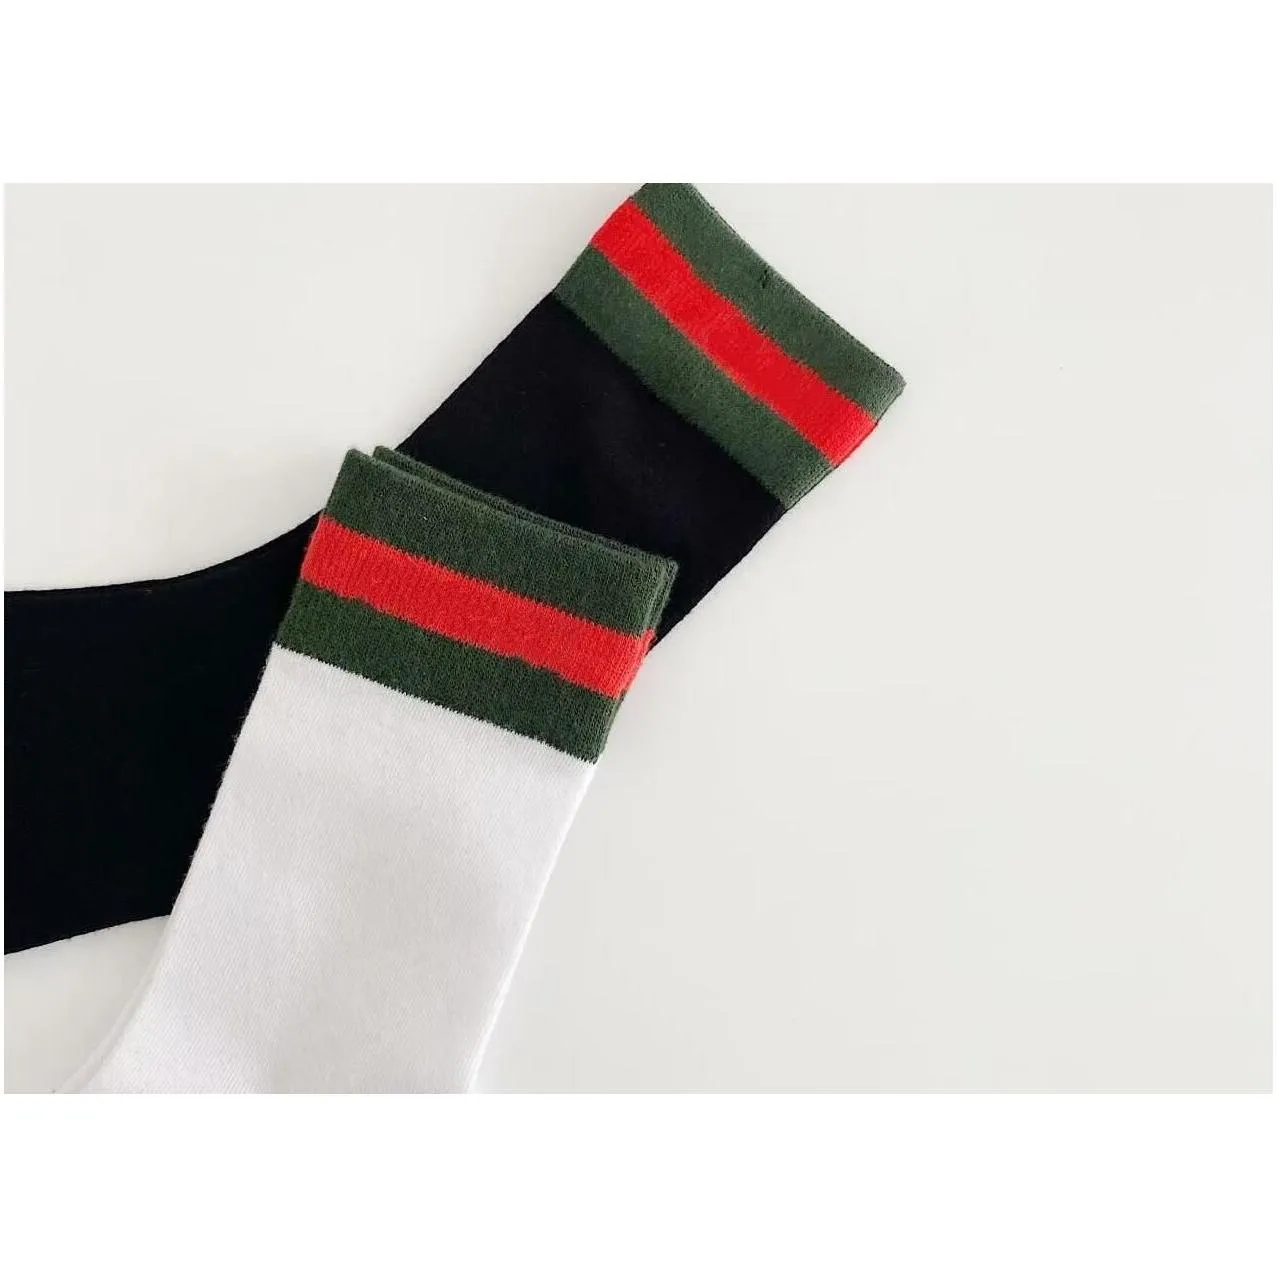 luxury designer cotton socks for men women red green letter embroidery black white breathable middle tube sock 2pairs/lot